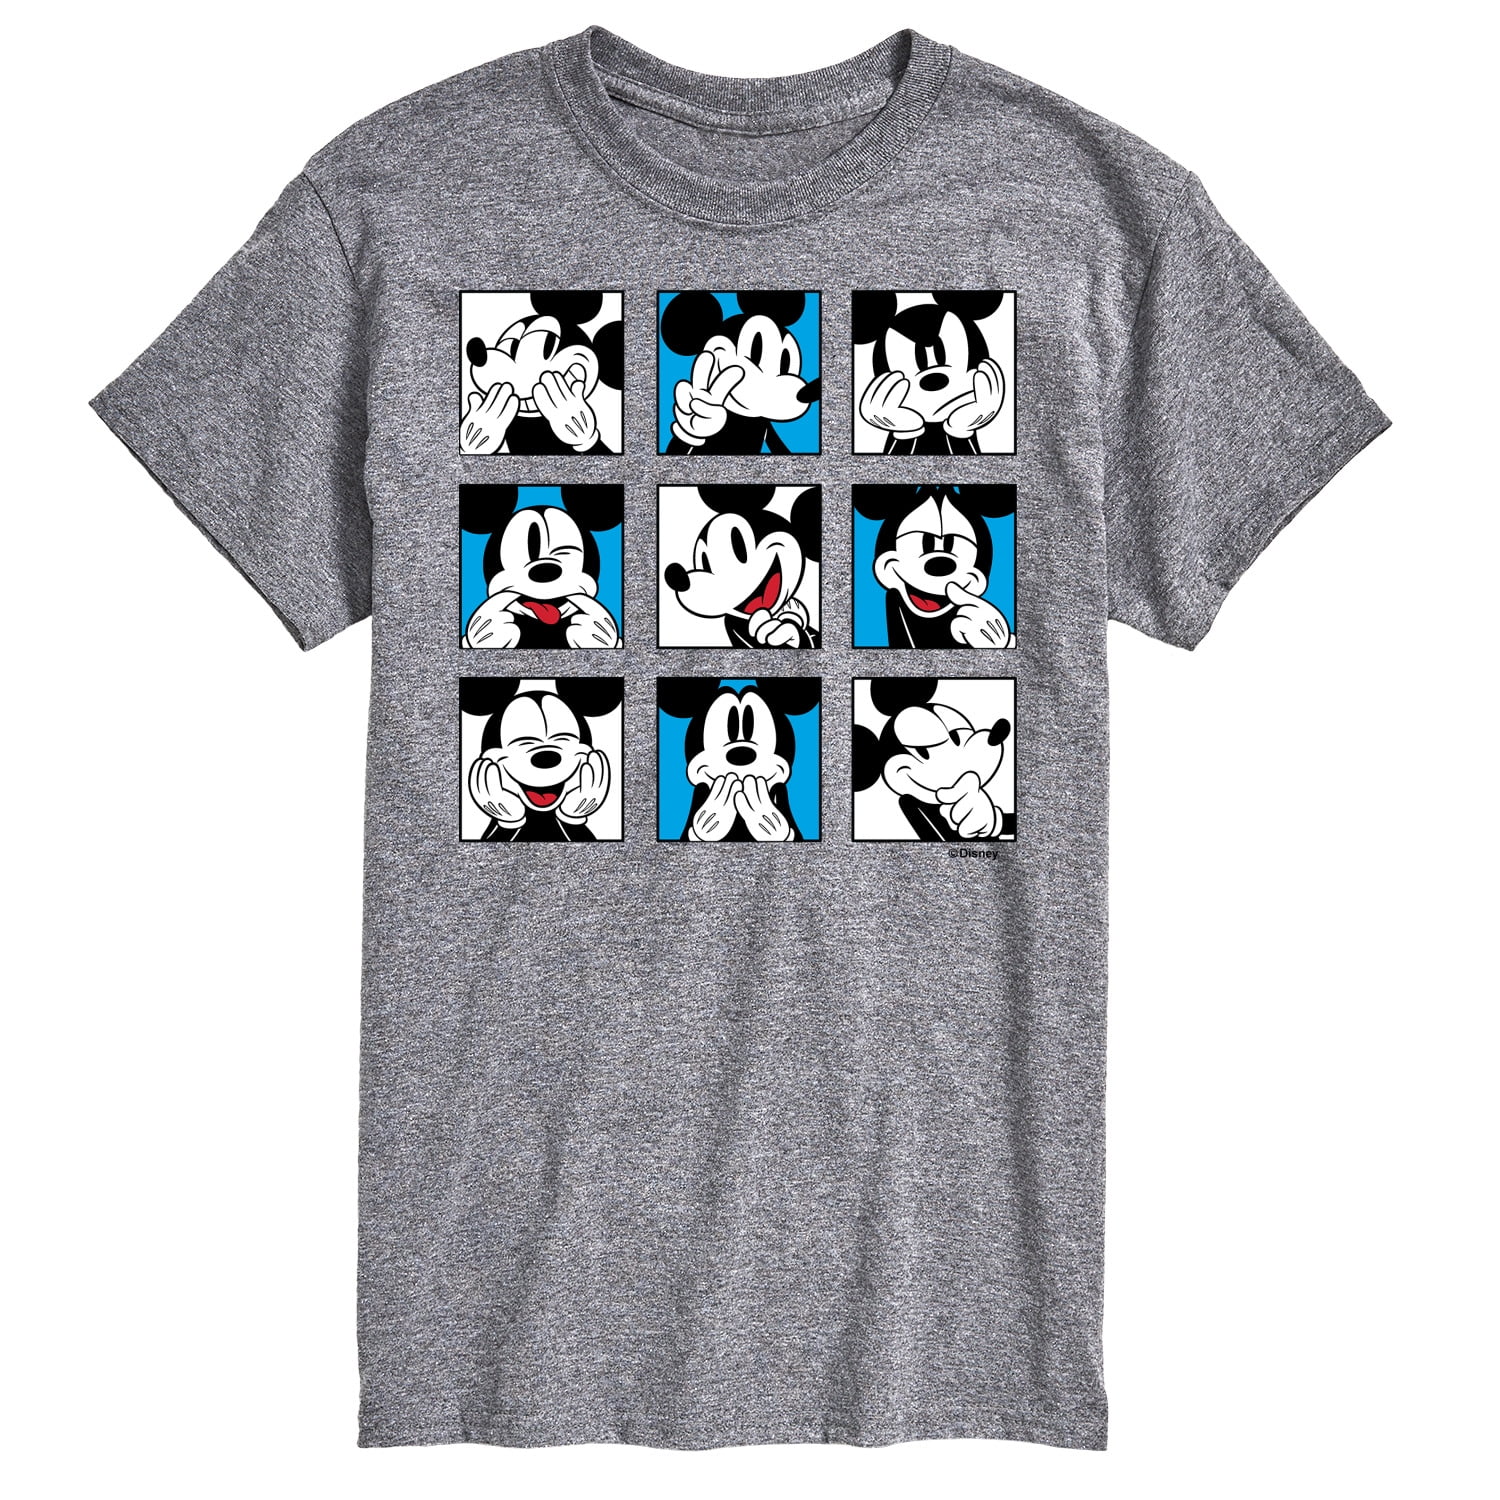 Men's Disney Mickey Mouse & Friends Donald Duck Short Sleeve Graphic T-shirt  - Black - Disney Store : Target